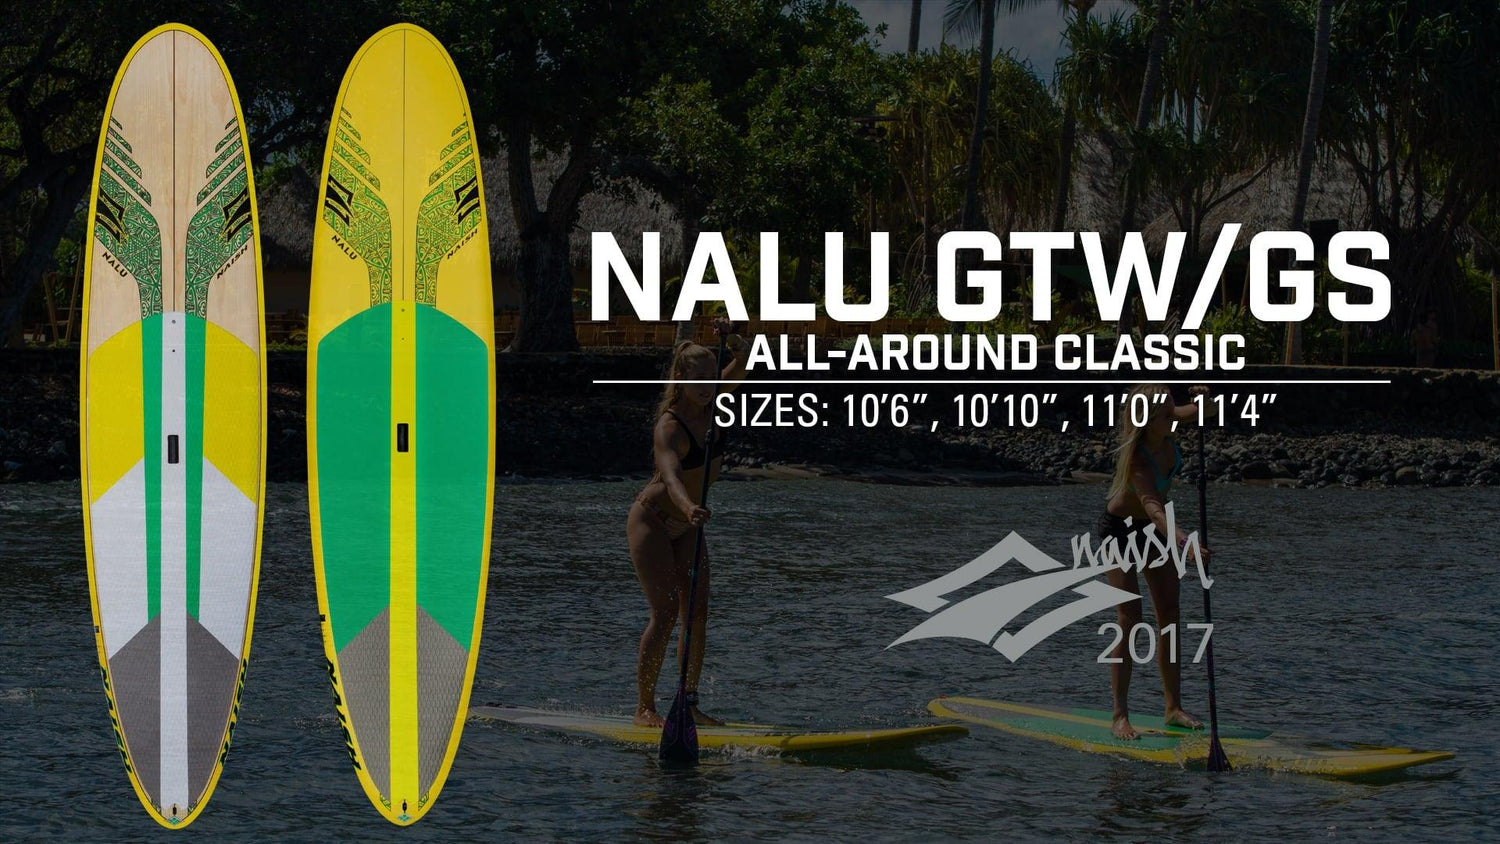 2017 Naish Nalu GTW/GS - Naish.com